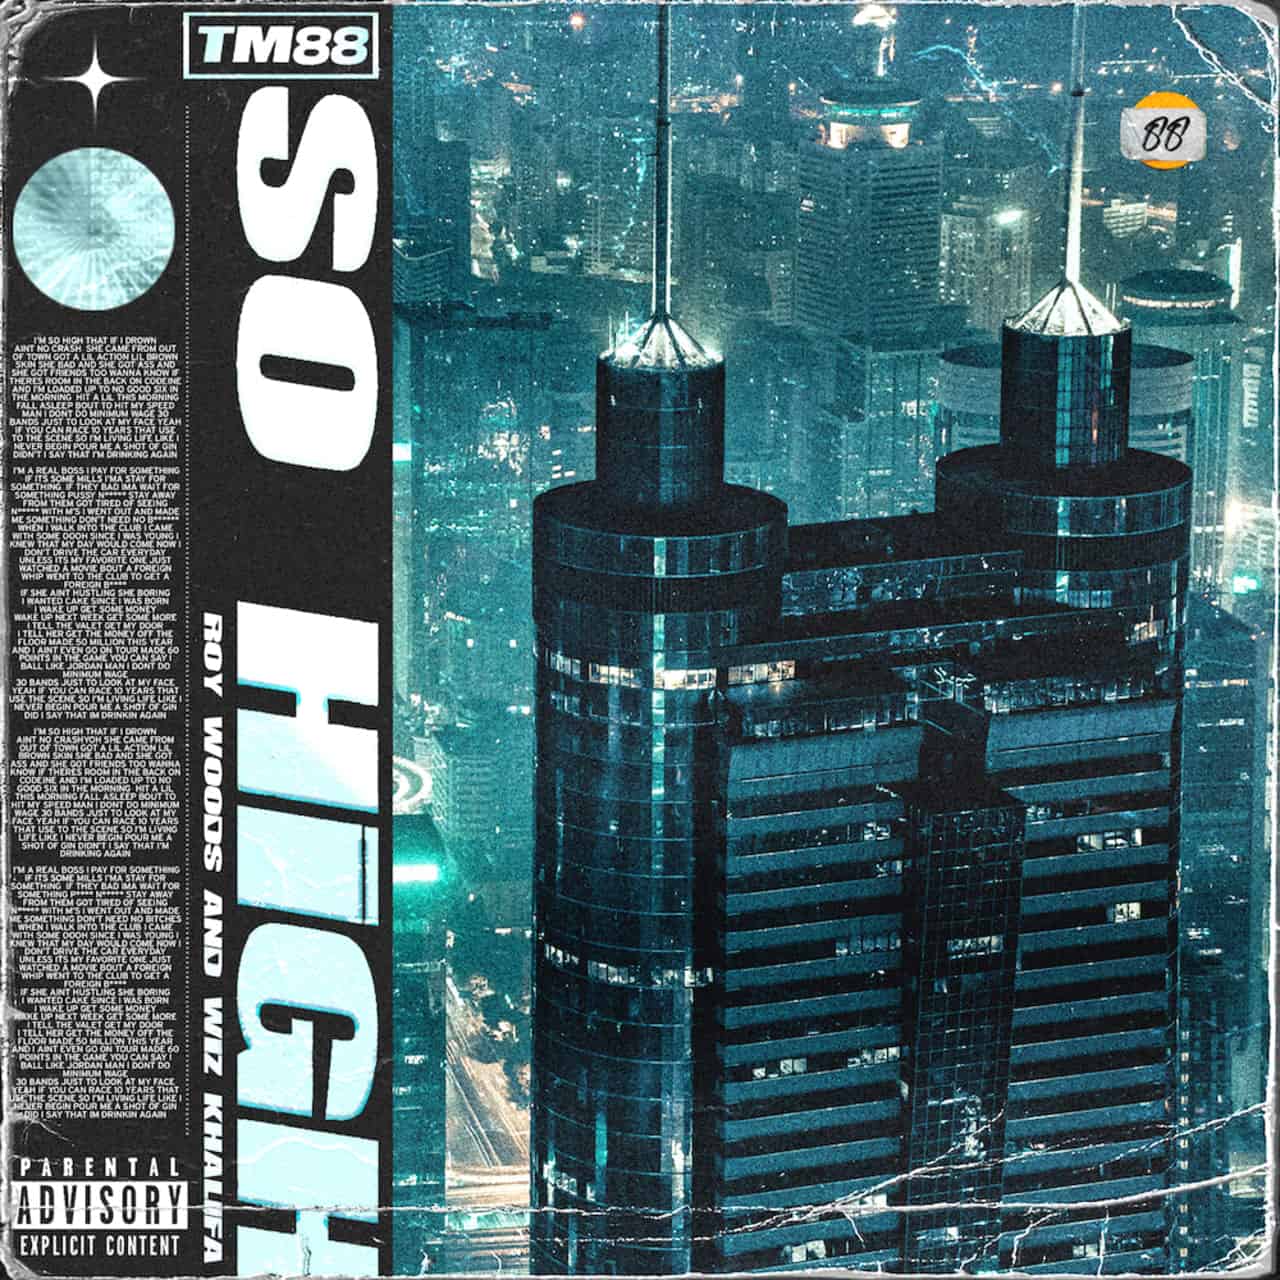 New Music TM88, Wiz Khalifa, Roy Woods - So High